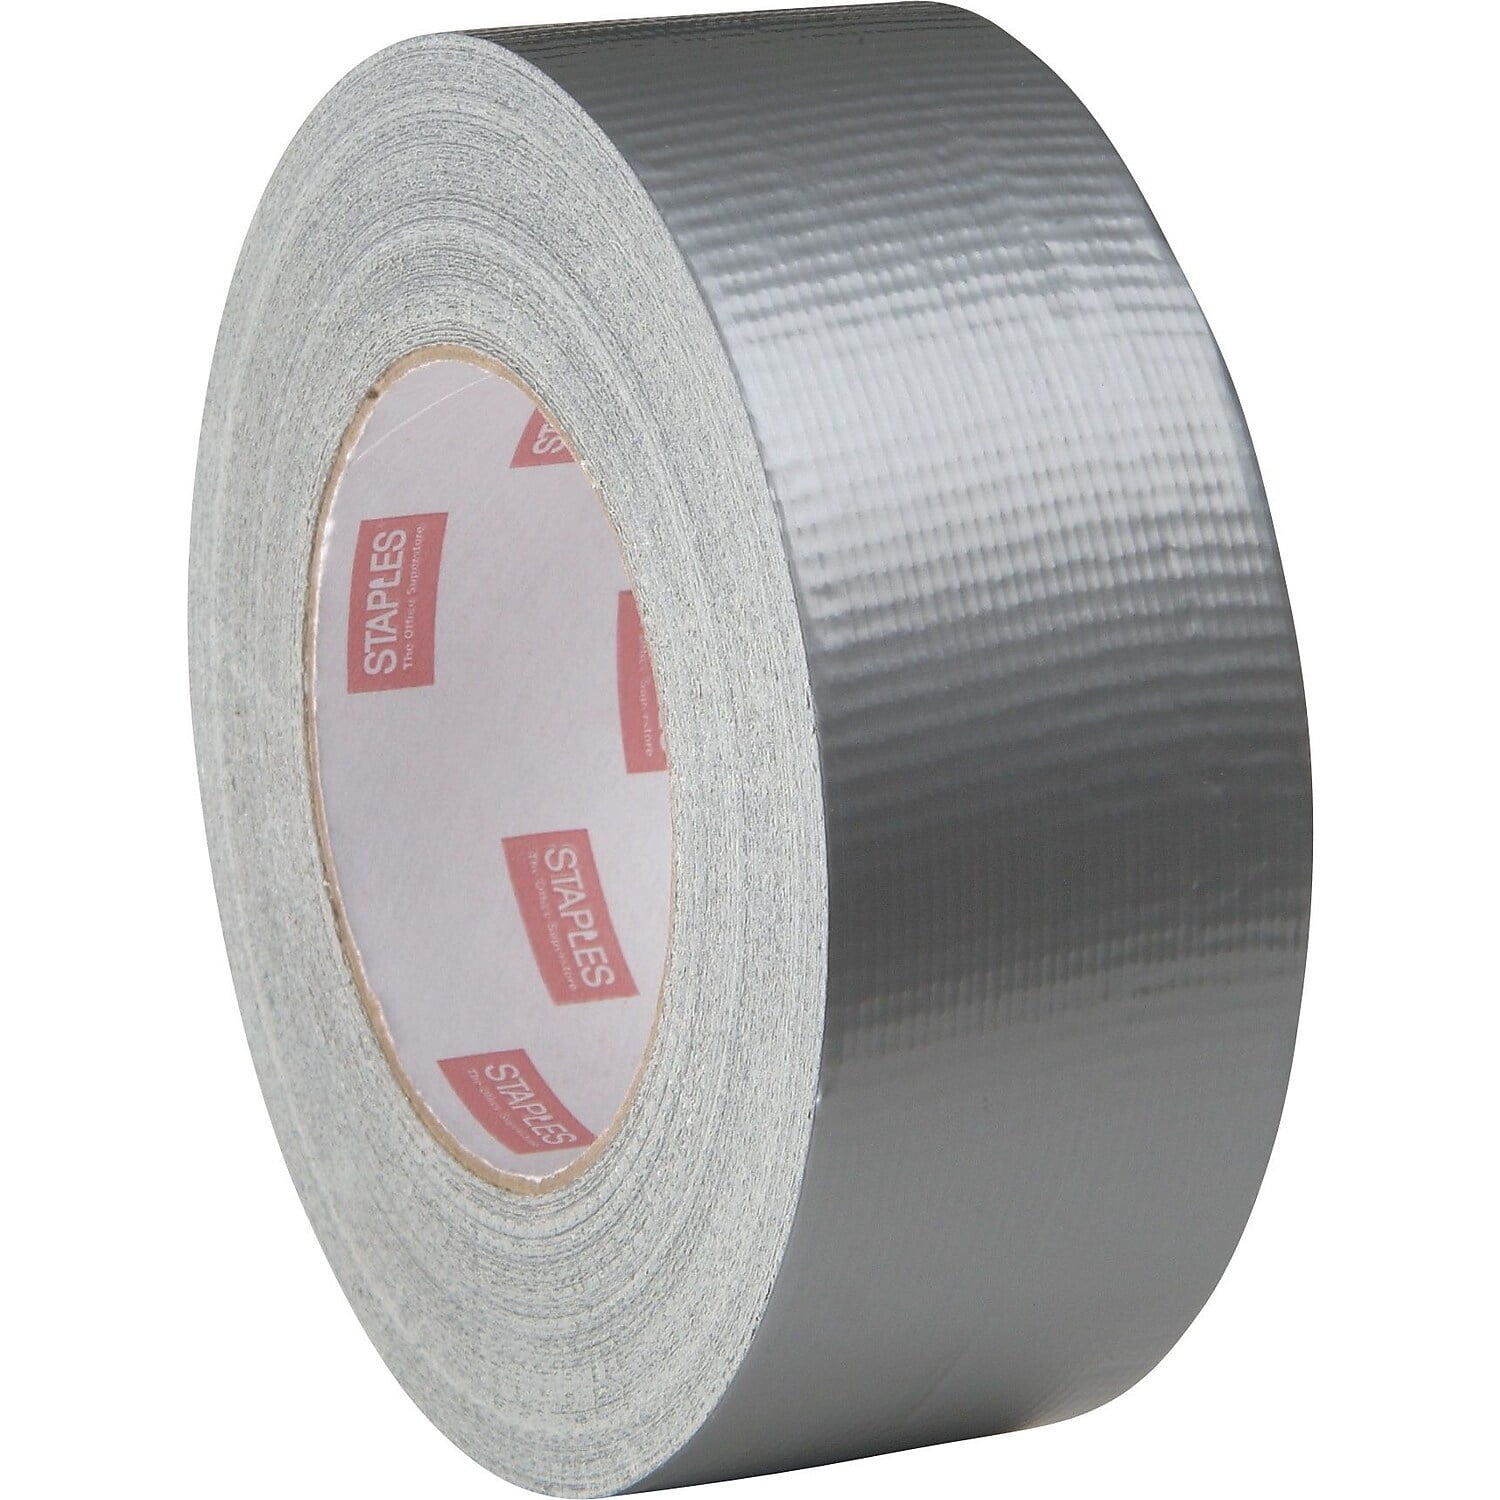 Intertape IG235 Iron Grip Duct Tape, 1.88 x 35 yd